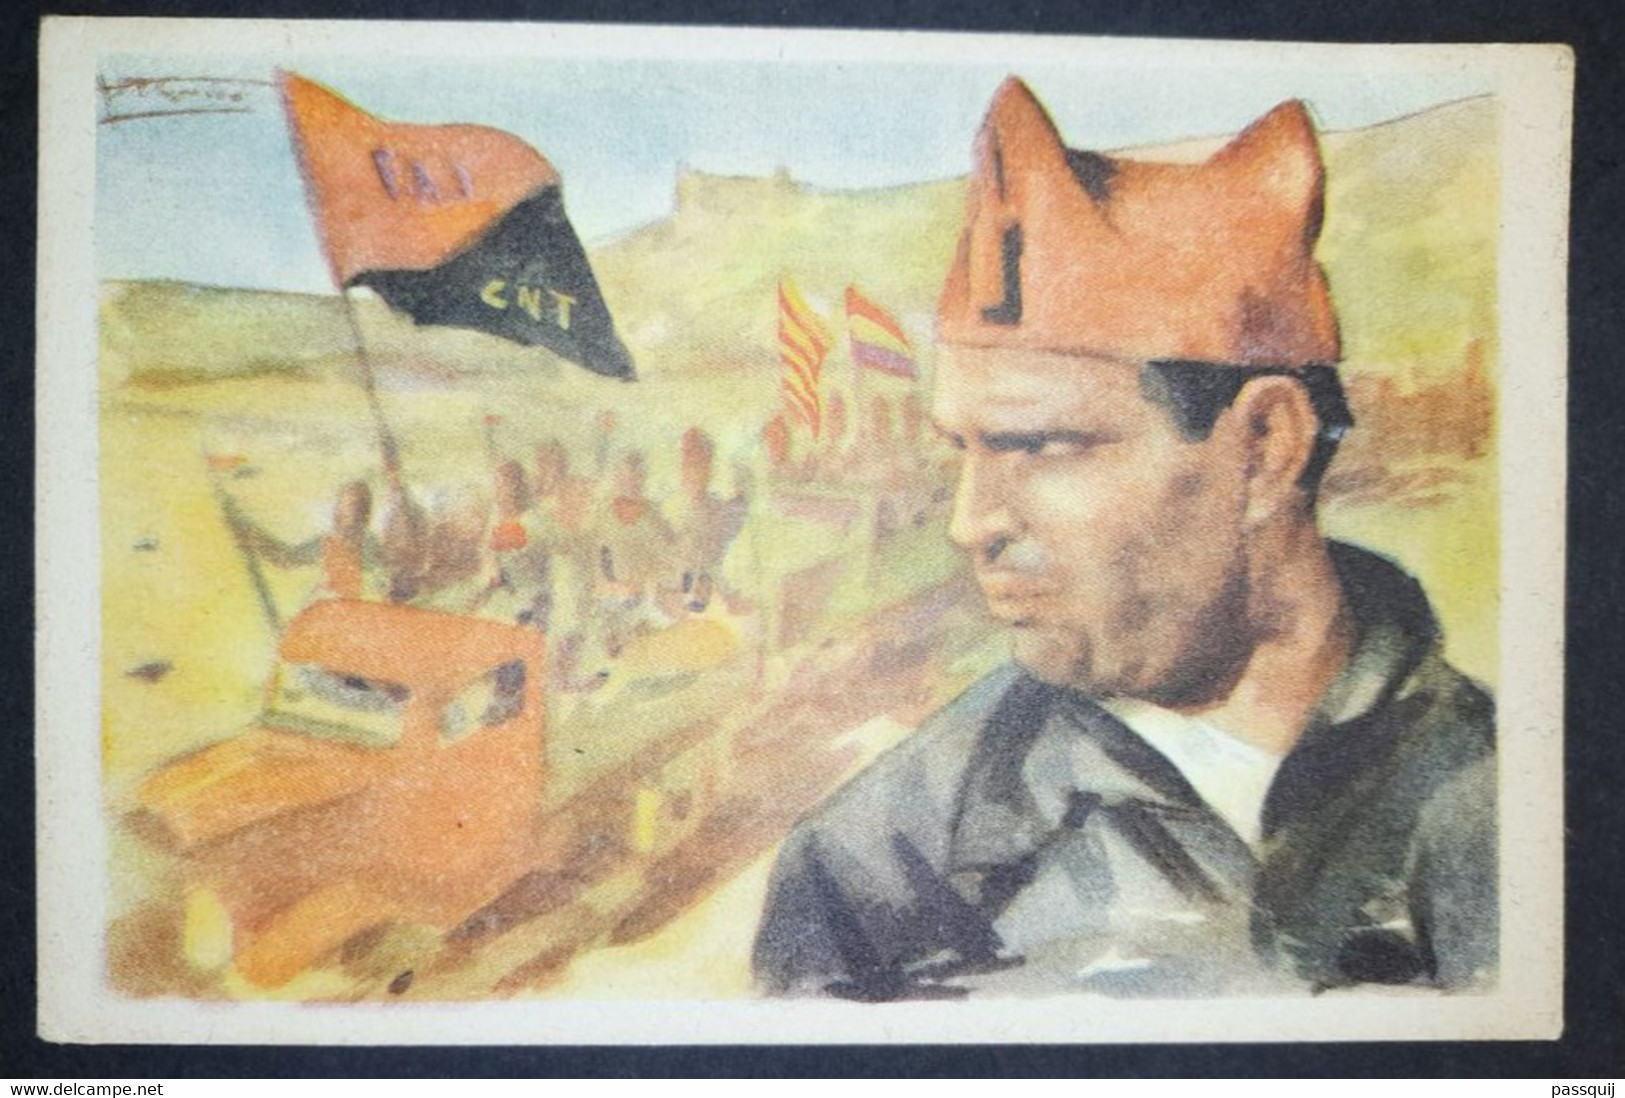 España Guerra Civil - Postal Cruz Roja Nº5 Durruti CNT FAI - Spain Civil War - Espagne Guerre - Antifascist - Anarchist - Vignette Della Guerra Civile